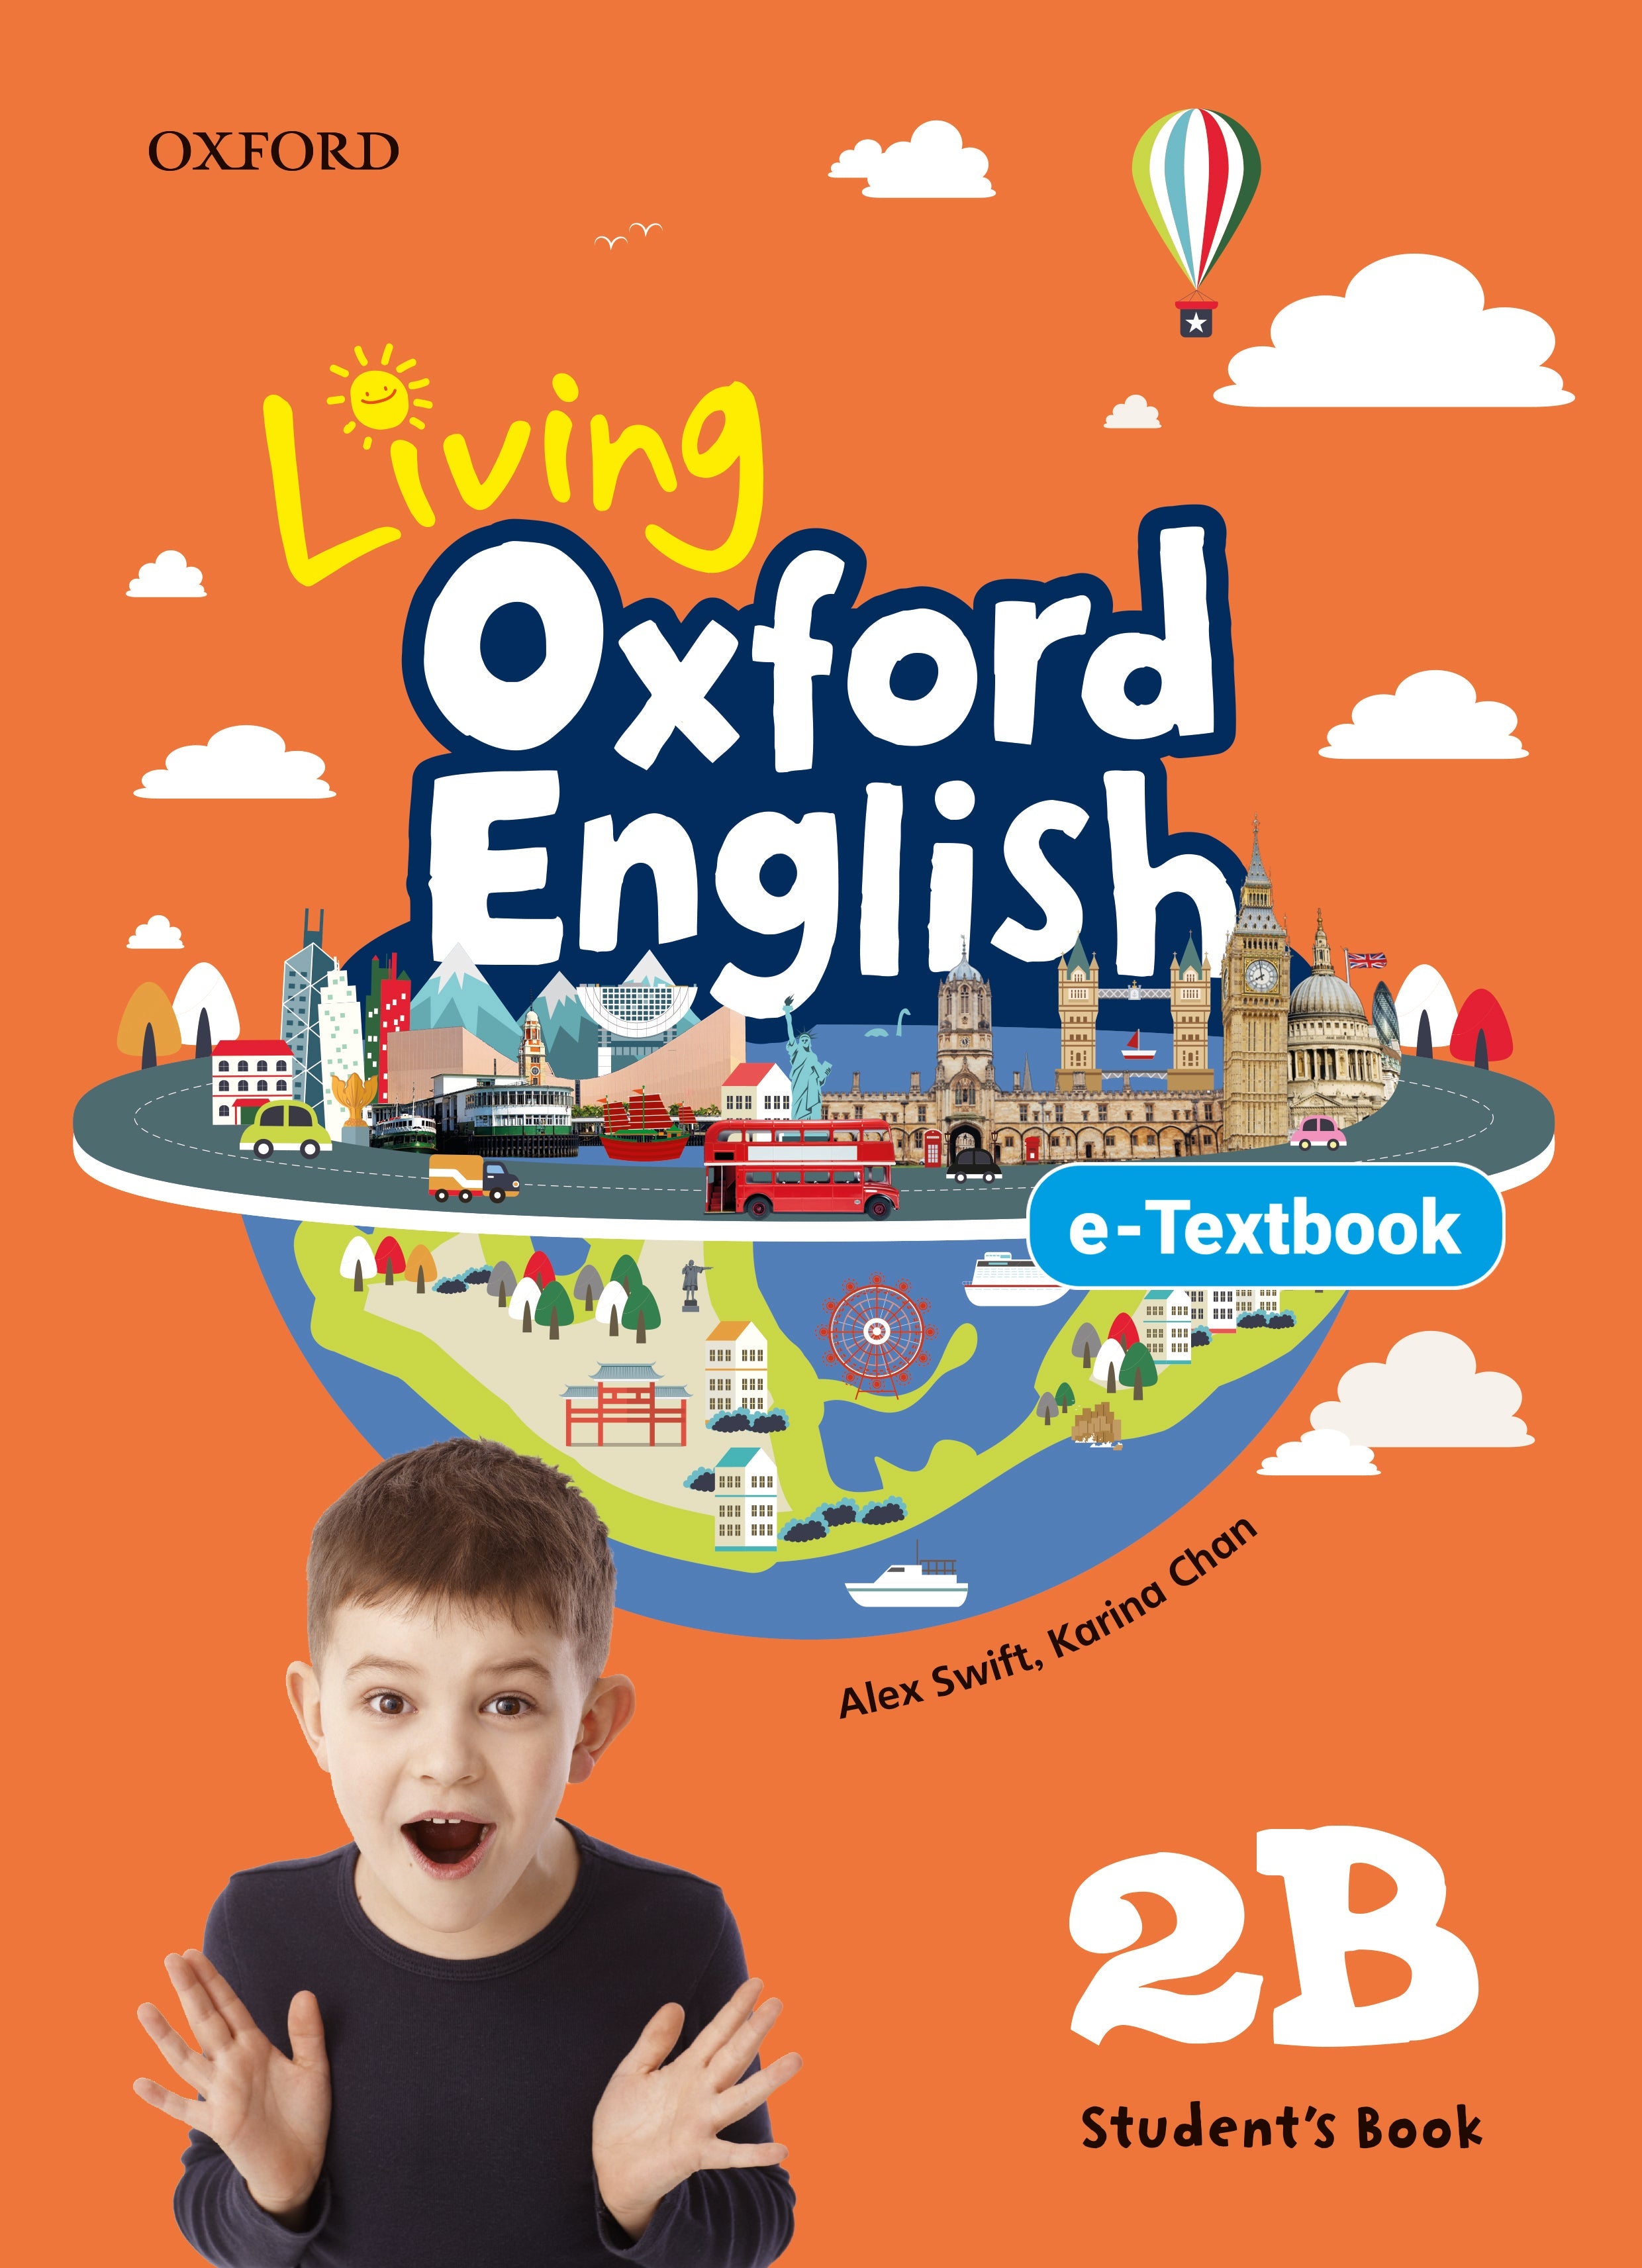 Living Oxford English Student's e-Textbook 2B - 牛津大學出版社網上商店